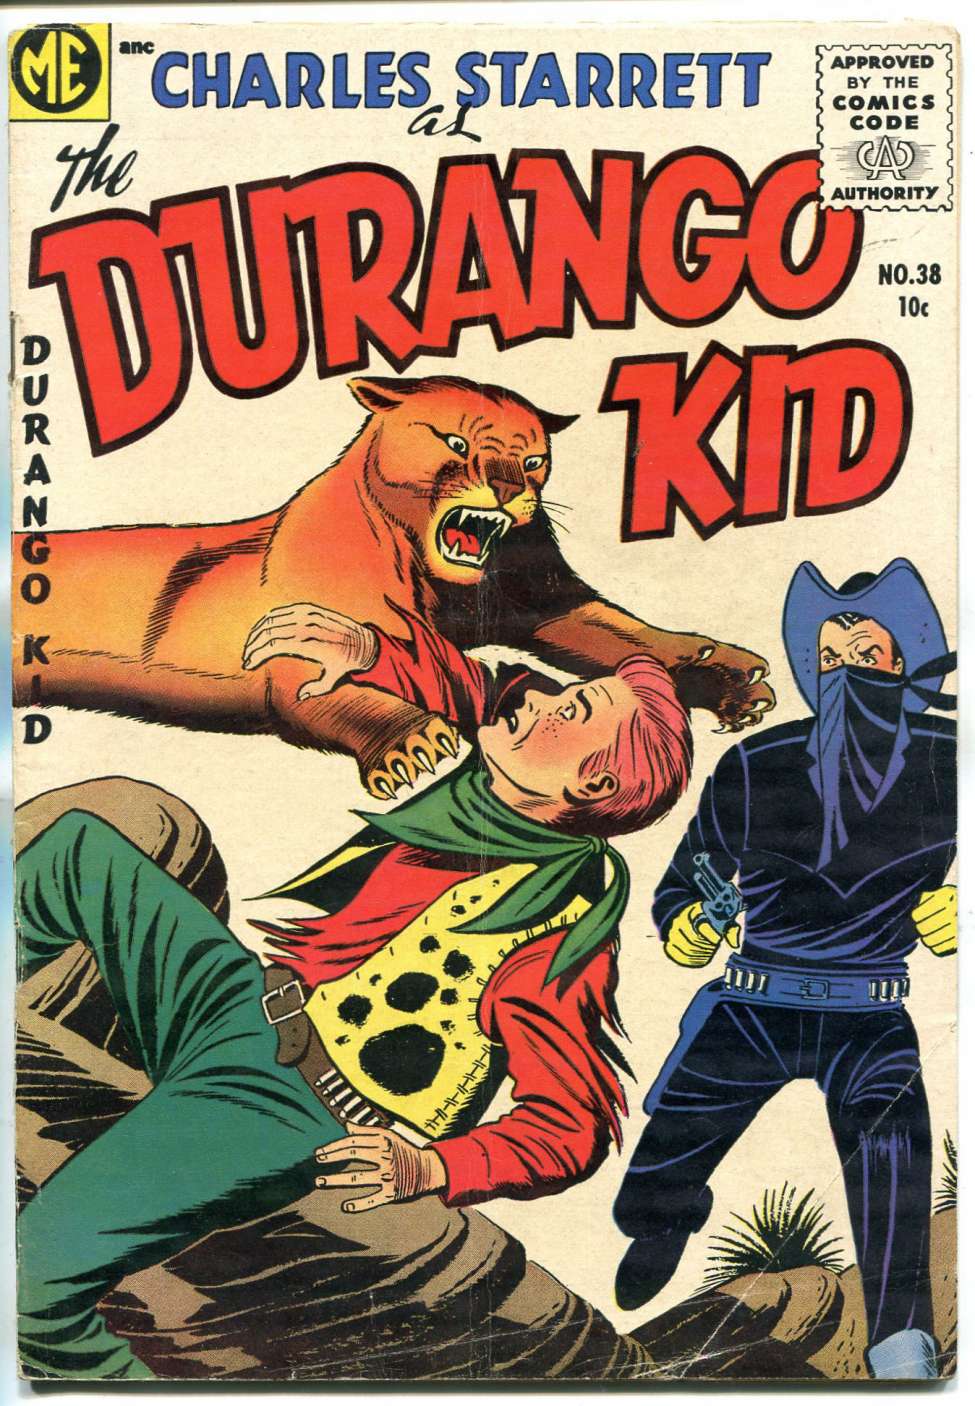 Comic Book Cover For Durango Kid 38